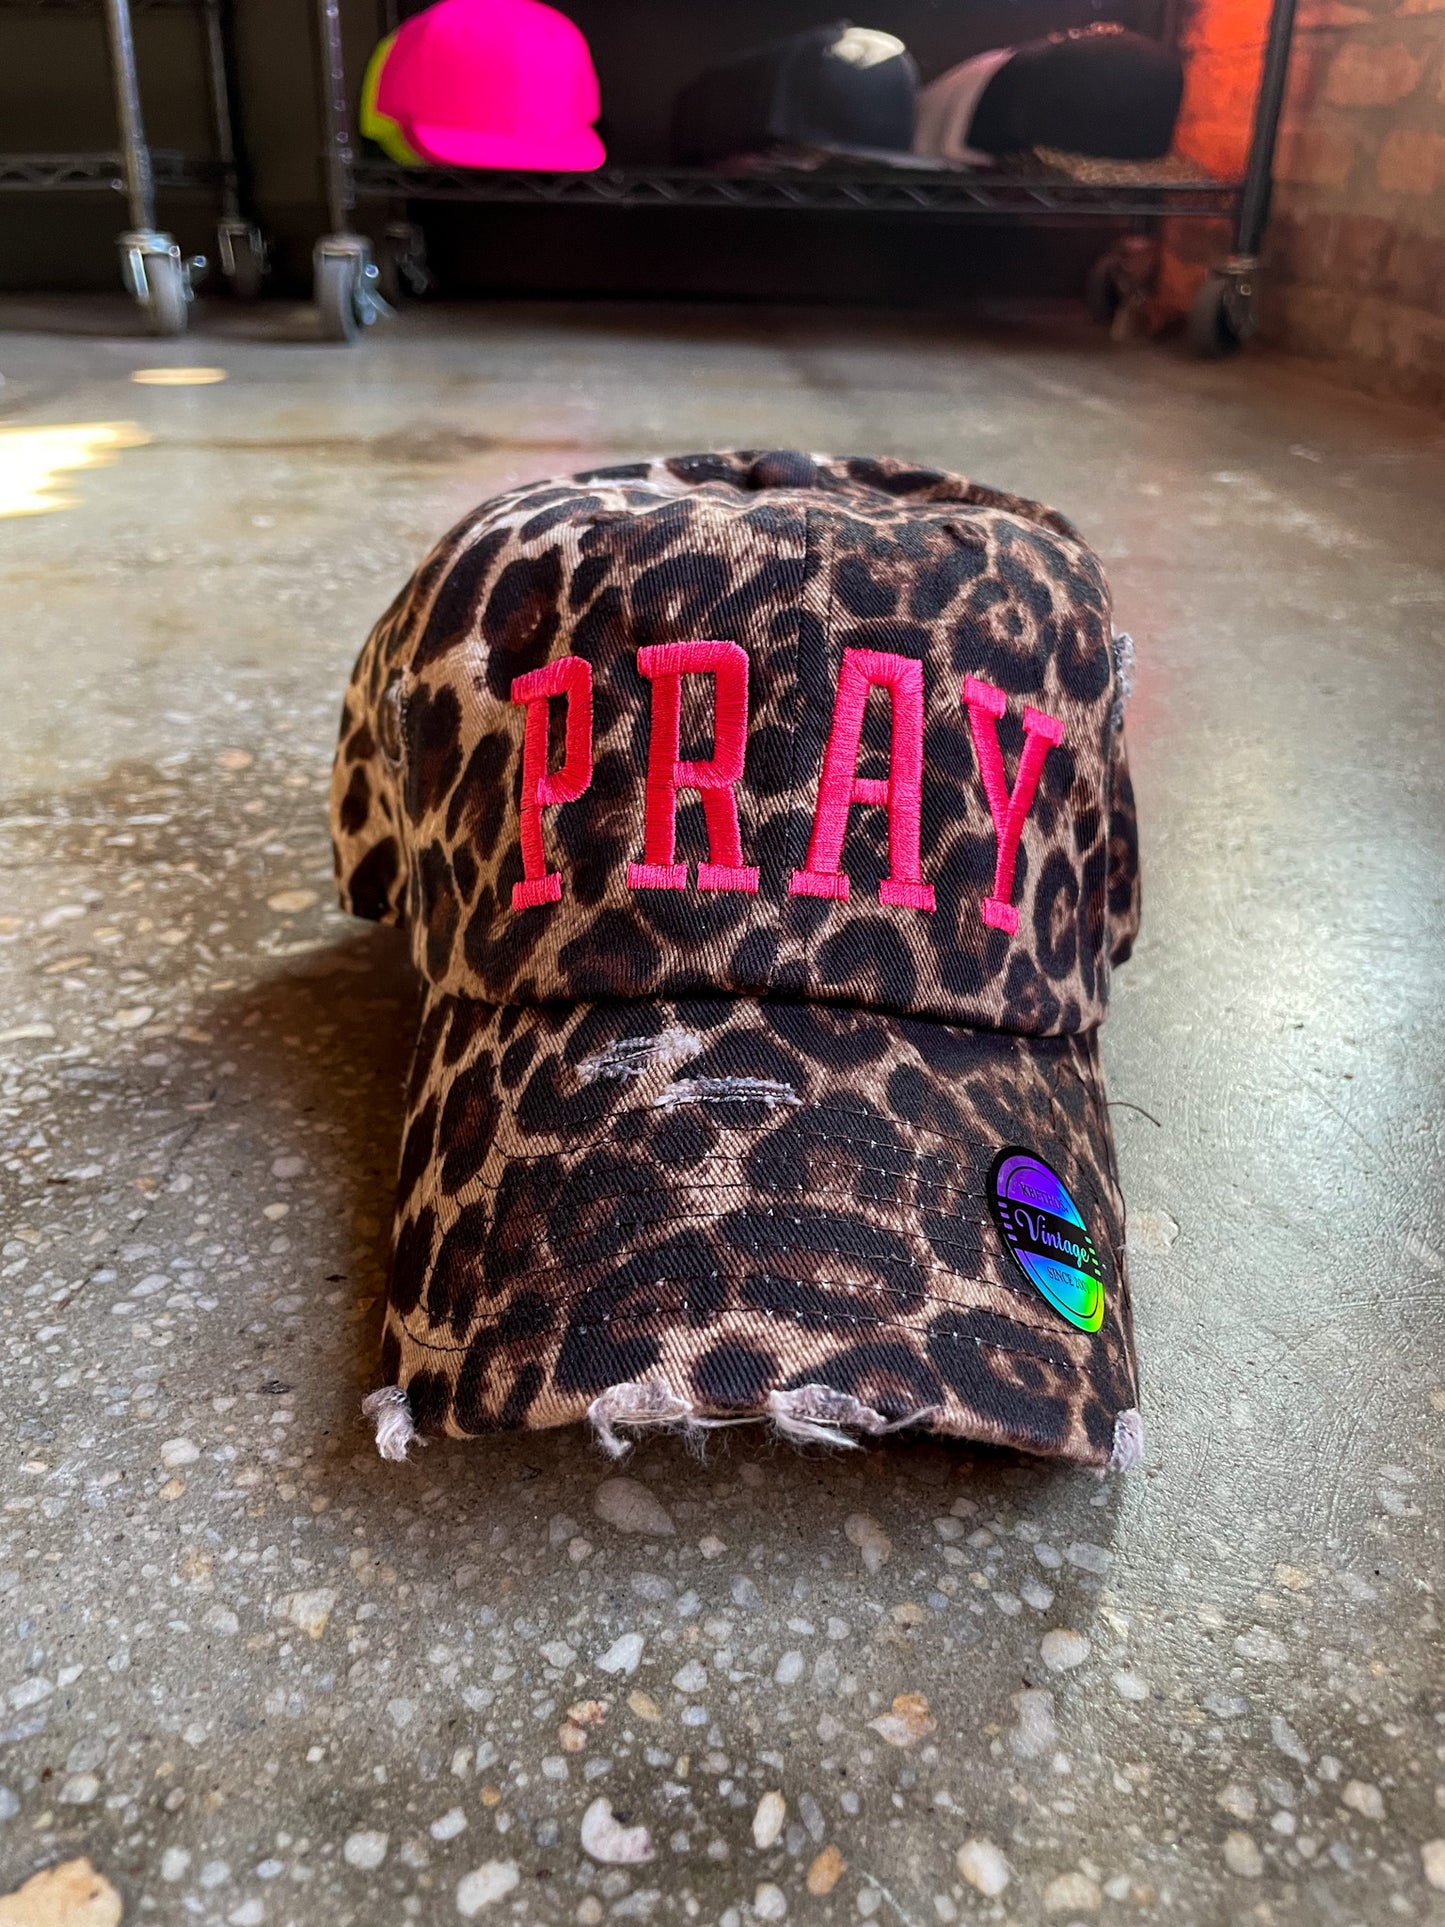 PRAY Hat (Distressed)